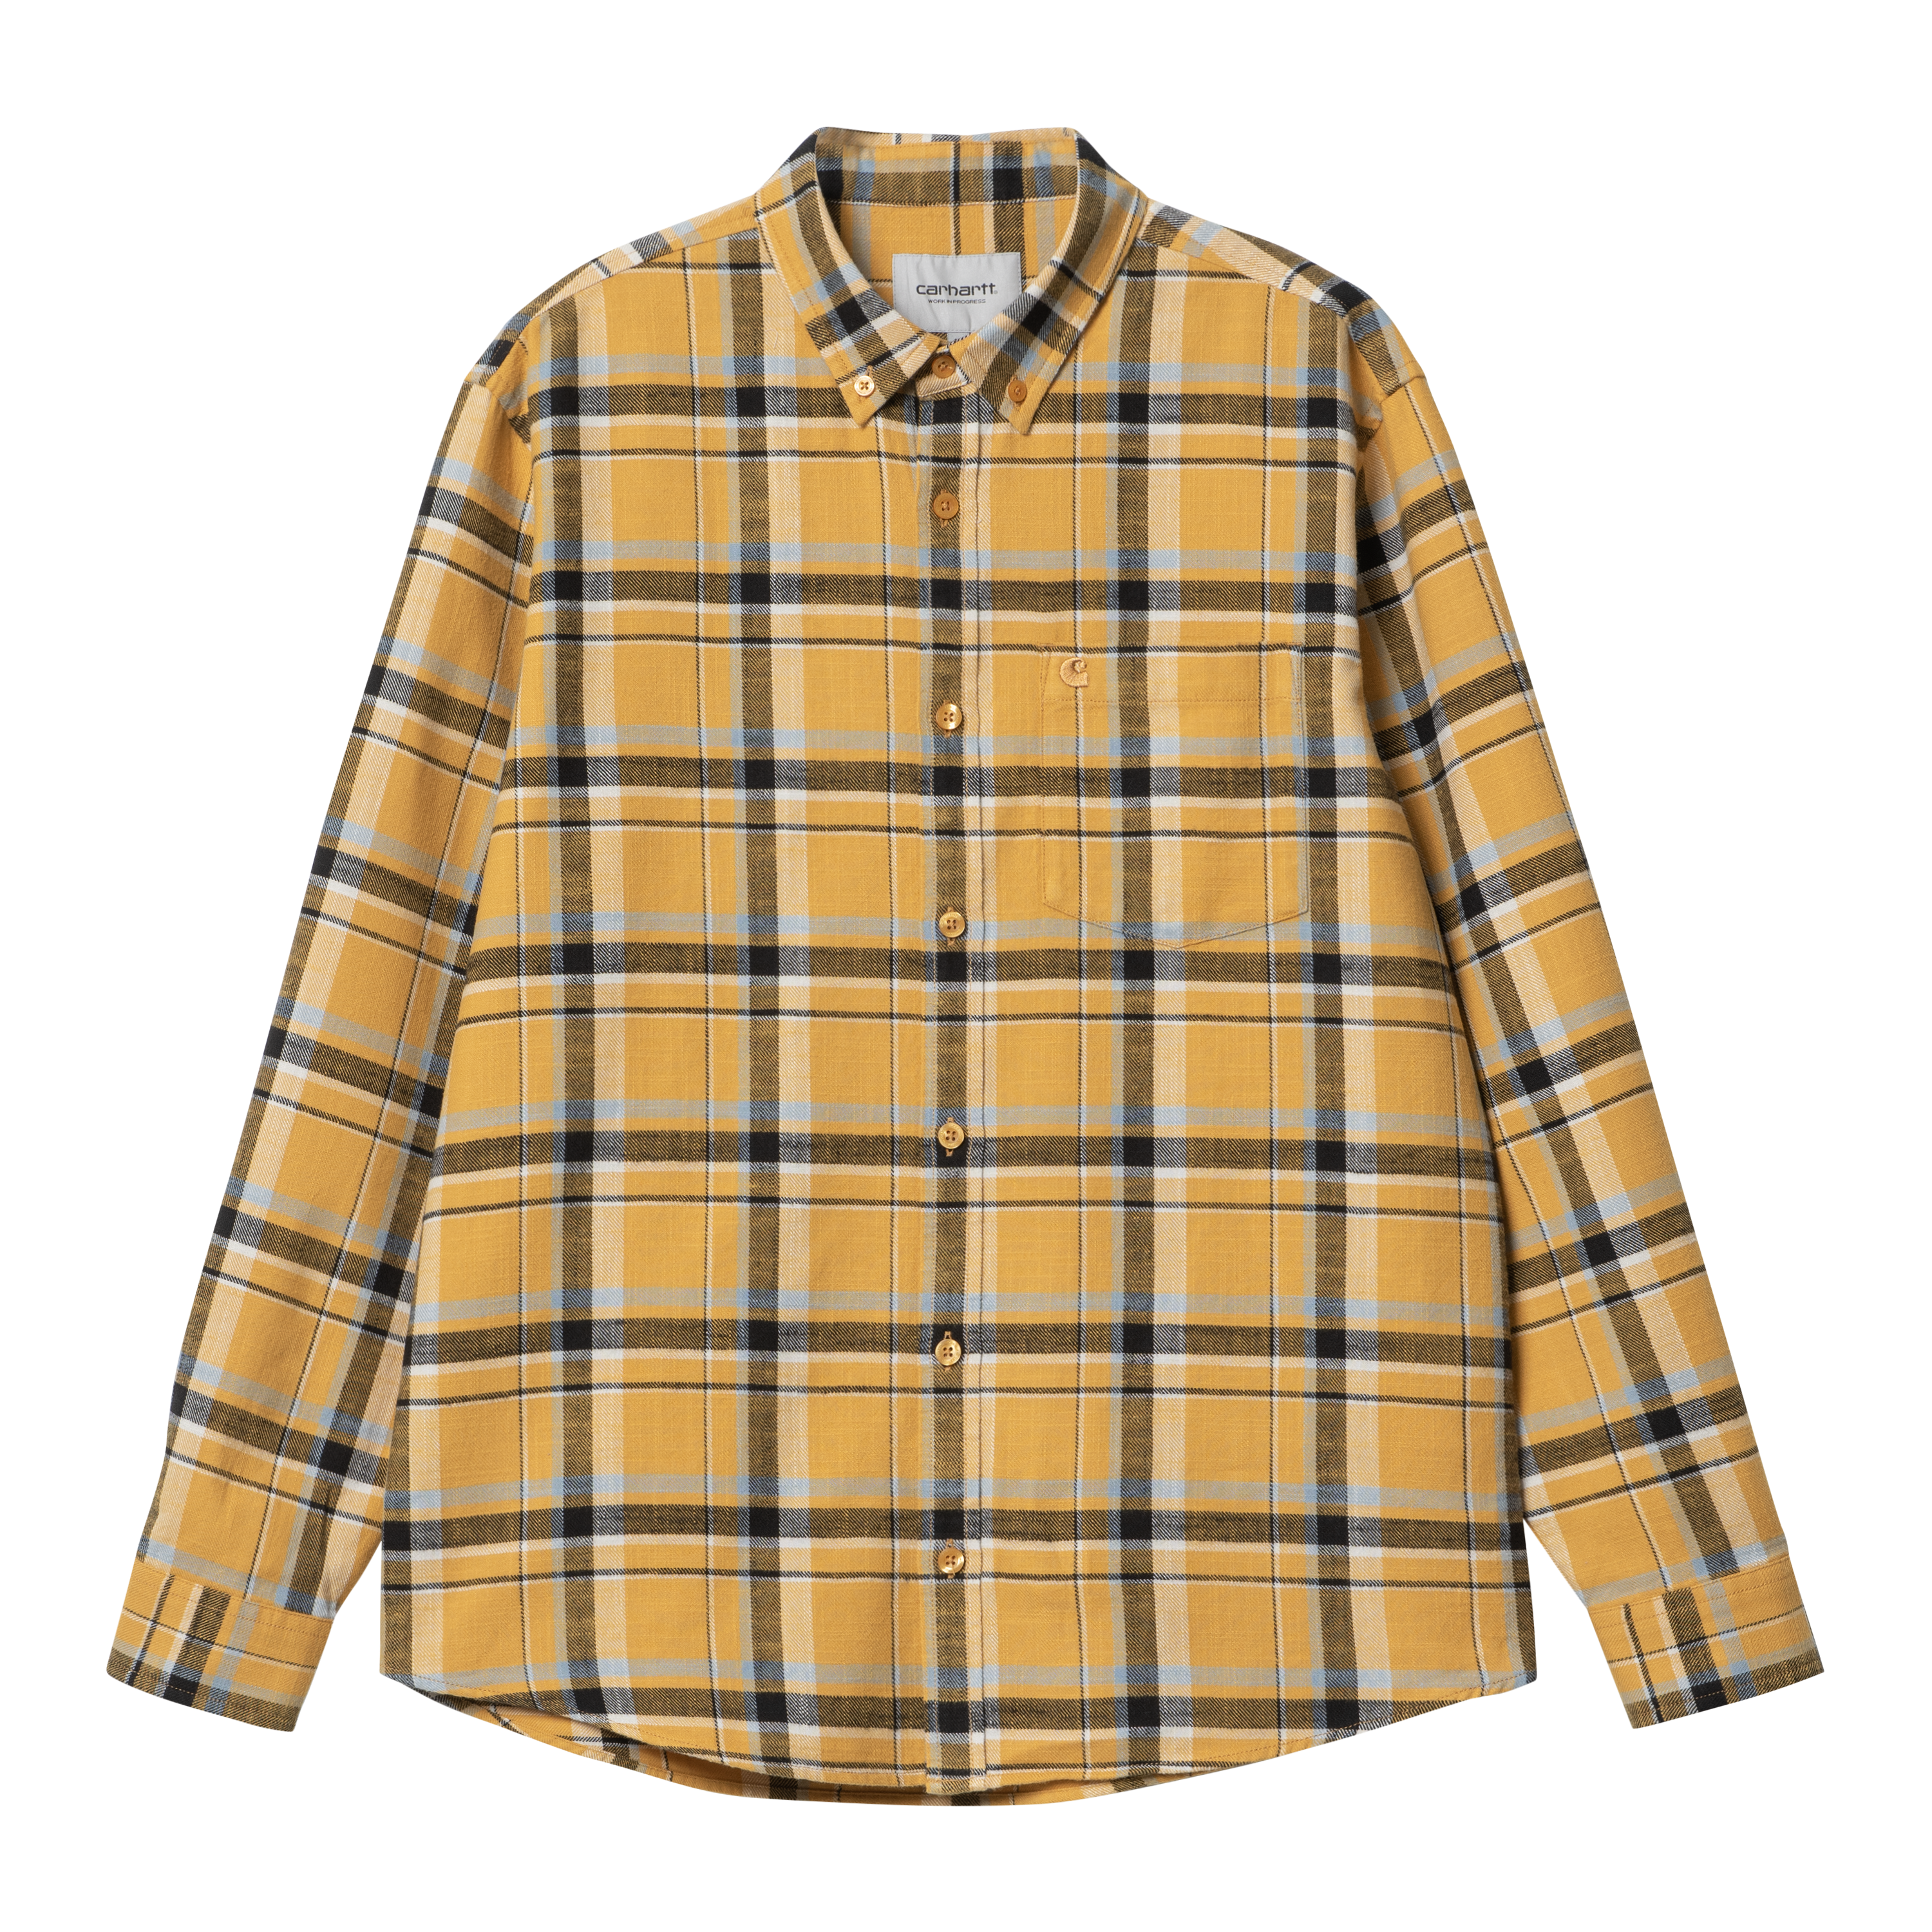 Carhartt WIP Long Sleeve Swenson Shirt in Multicolor